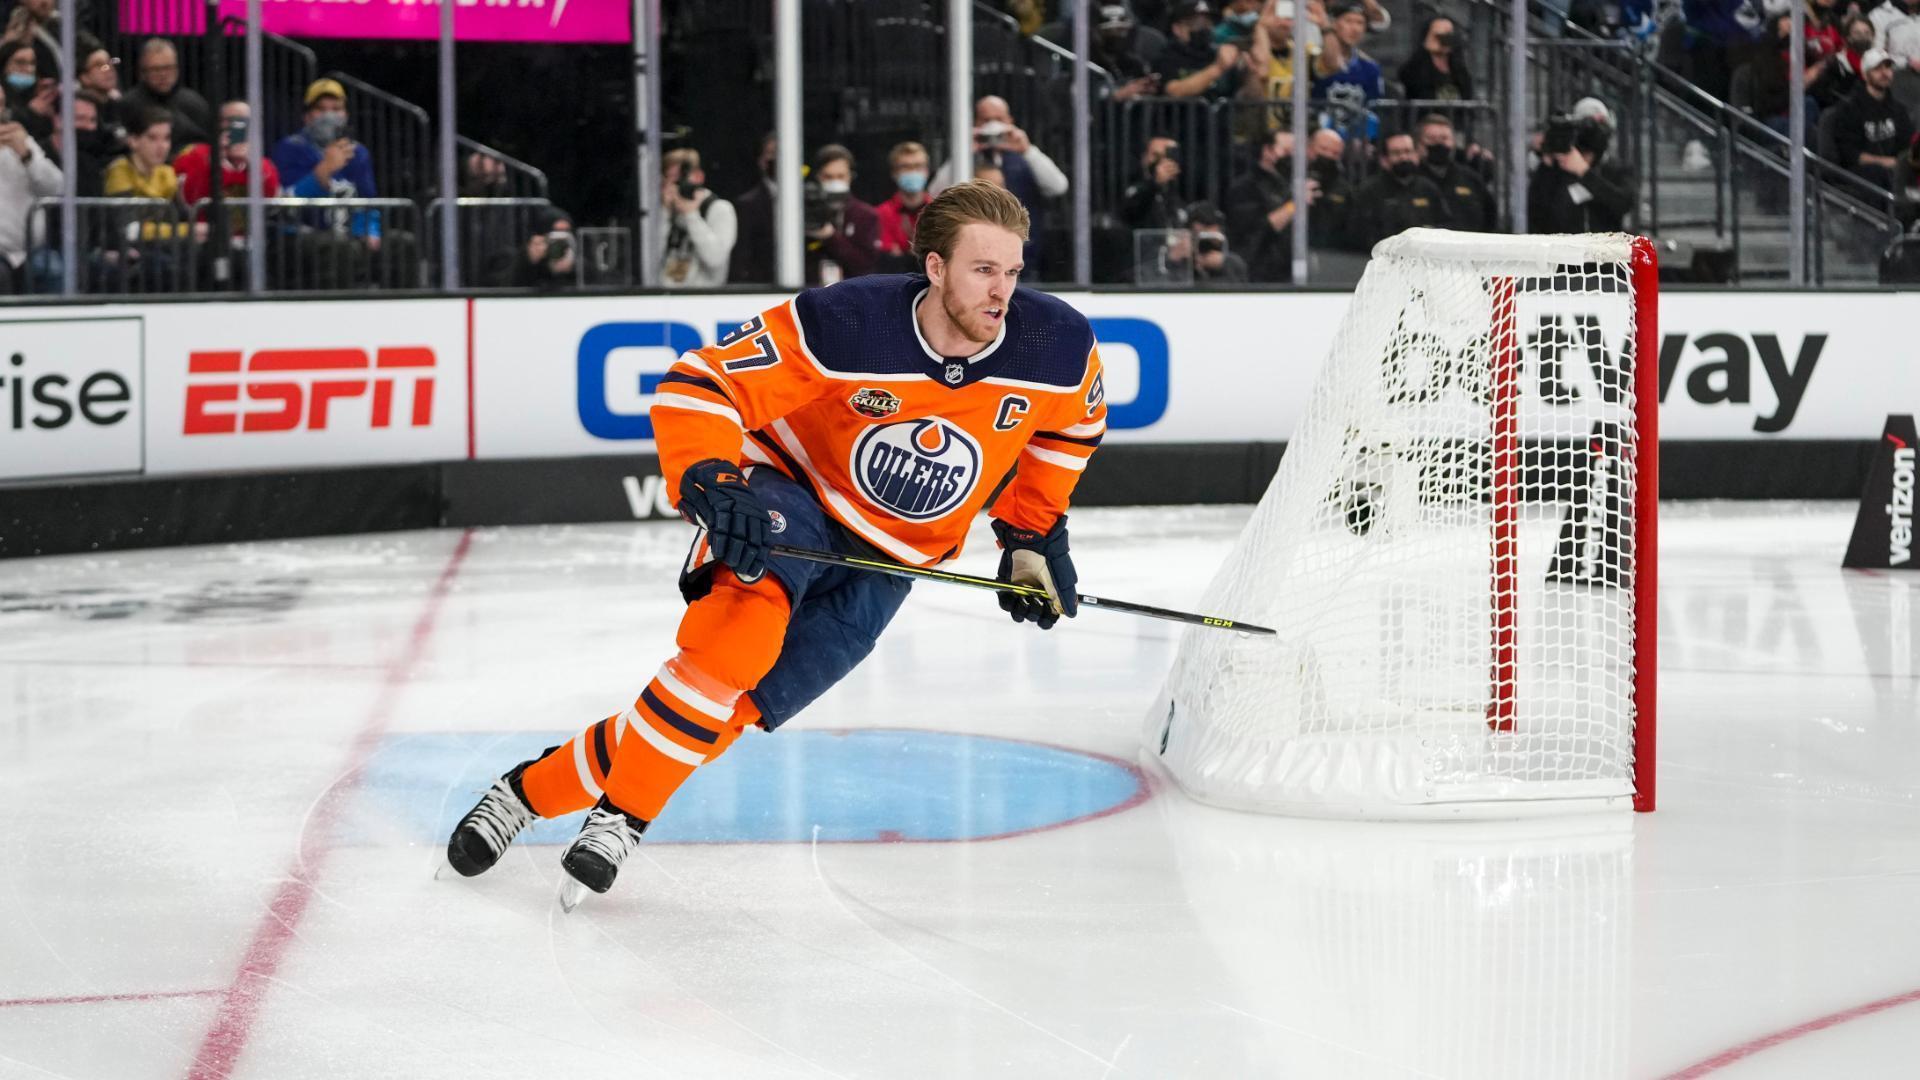 NHL All-Star skills predictions - Fastest skater, hardest shot